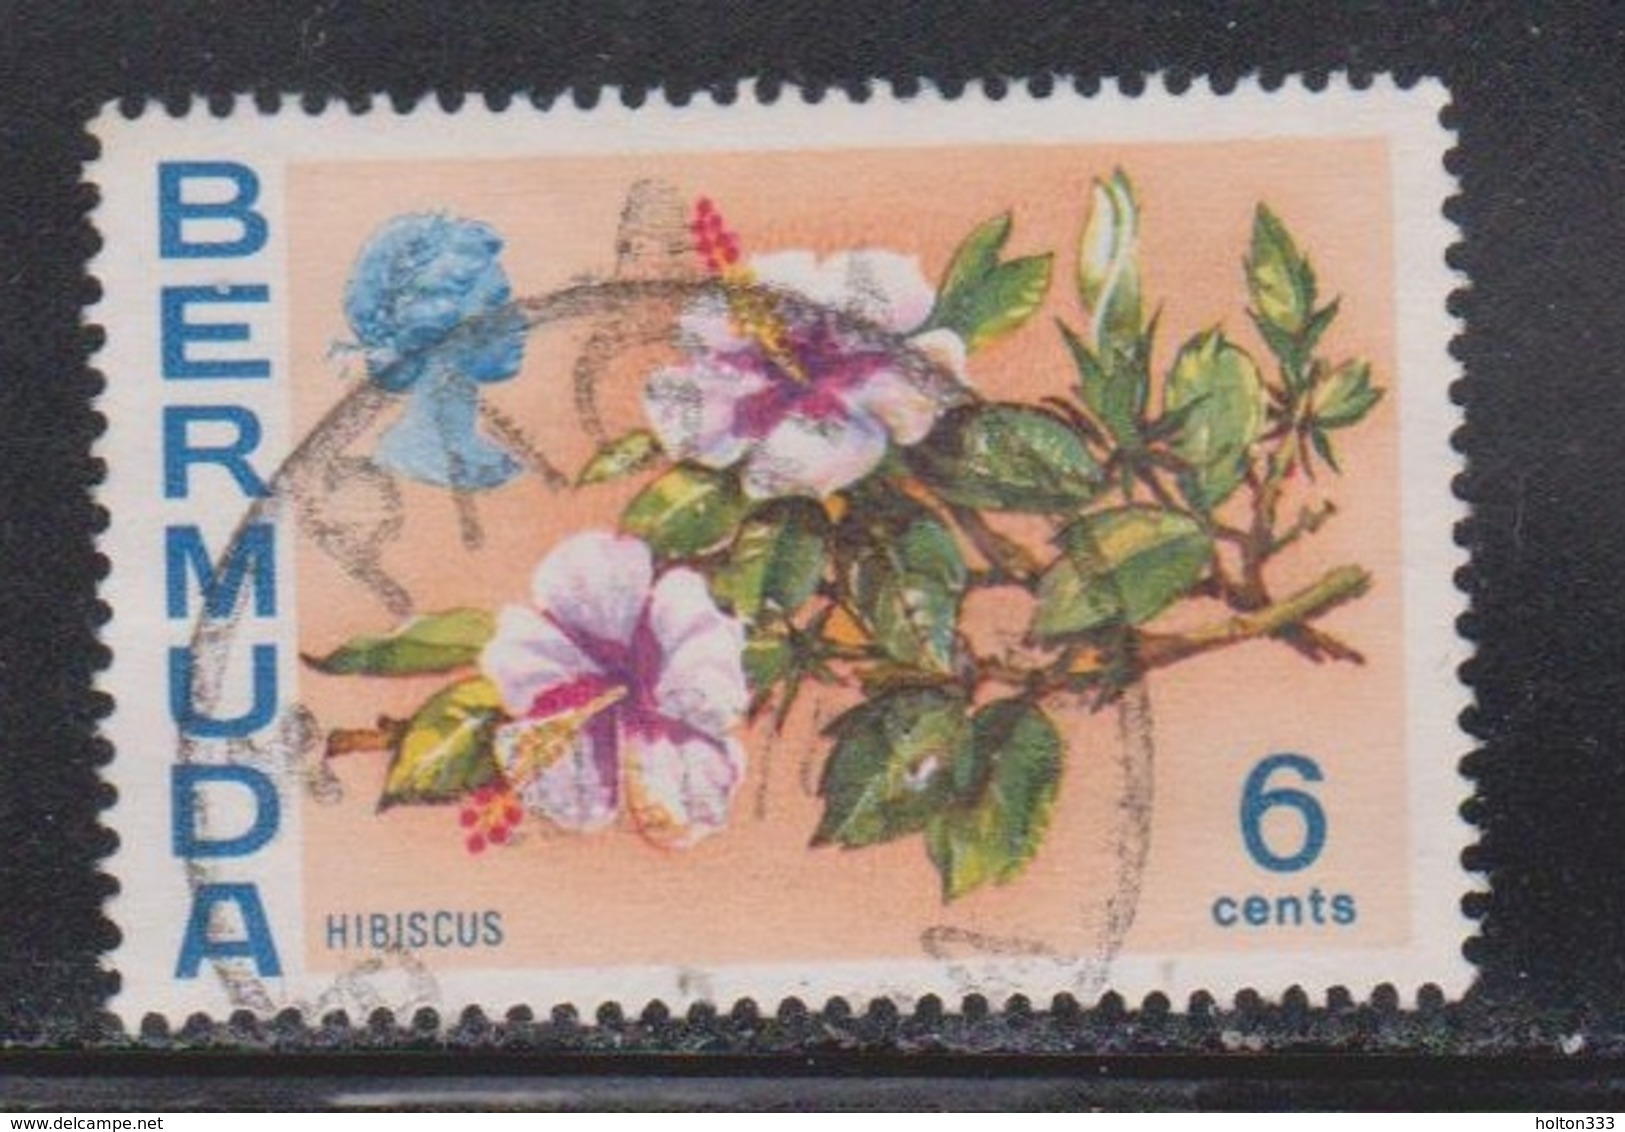 BERMUDA Scott # 260a Used - Flowers - Watermark Upright - Bermuda